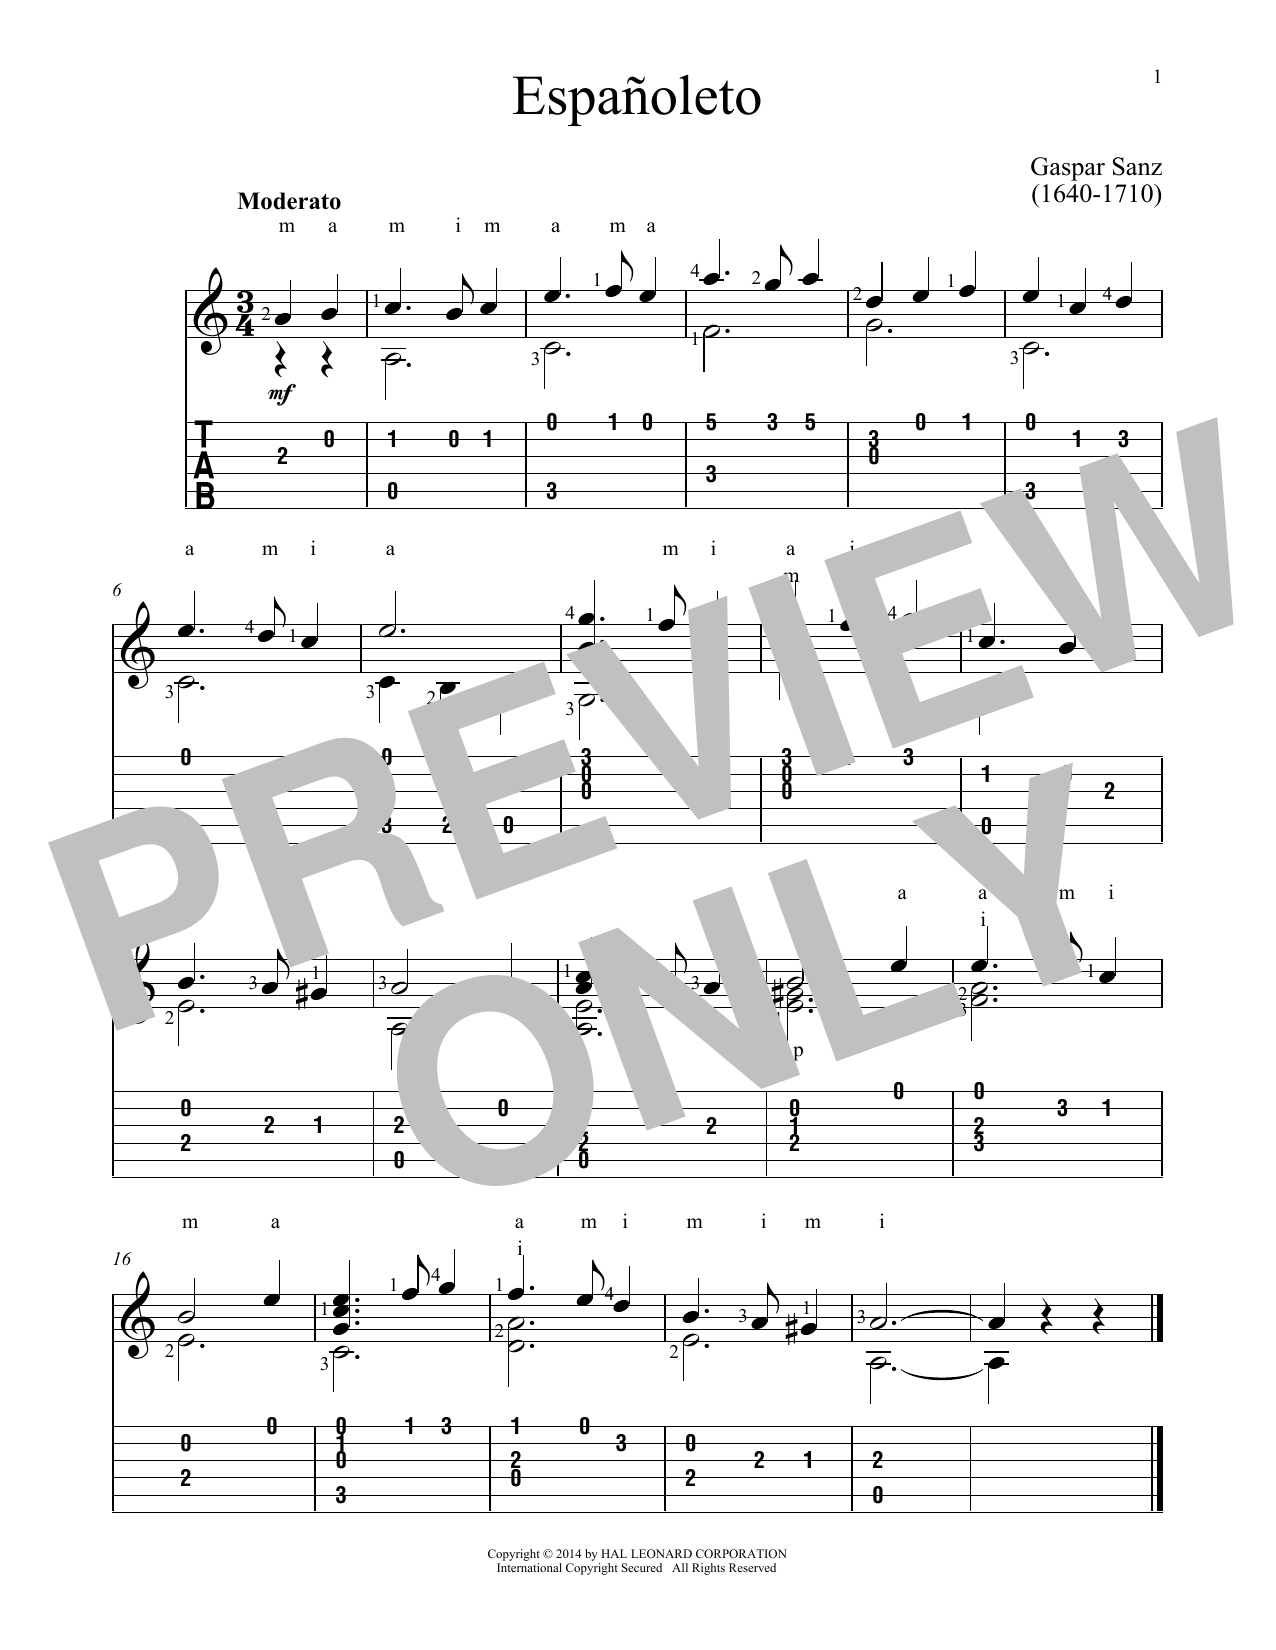 John Hill Espanoleta Sheet Music Notes & Chords for Guitar Tab - Download or Print PDF